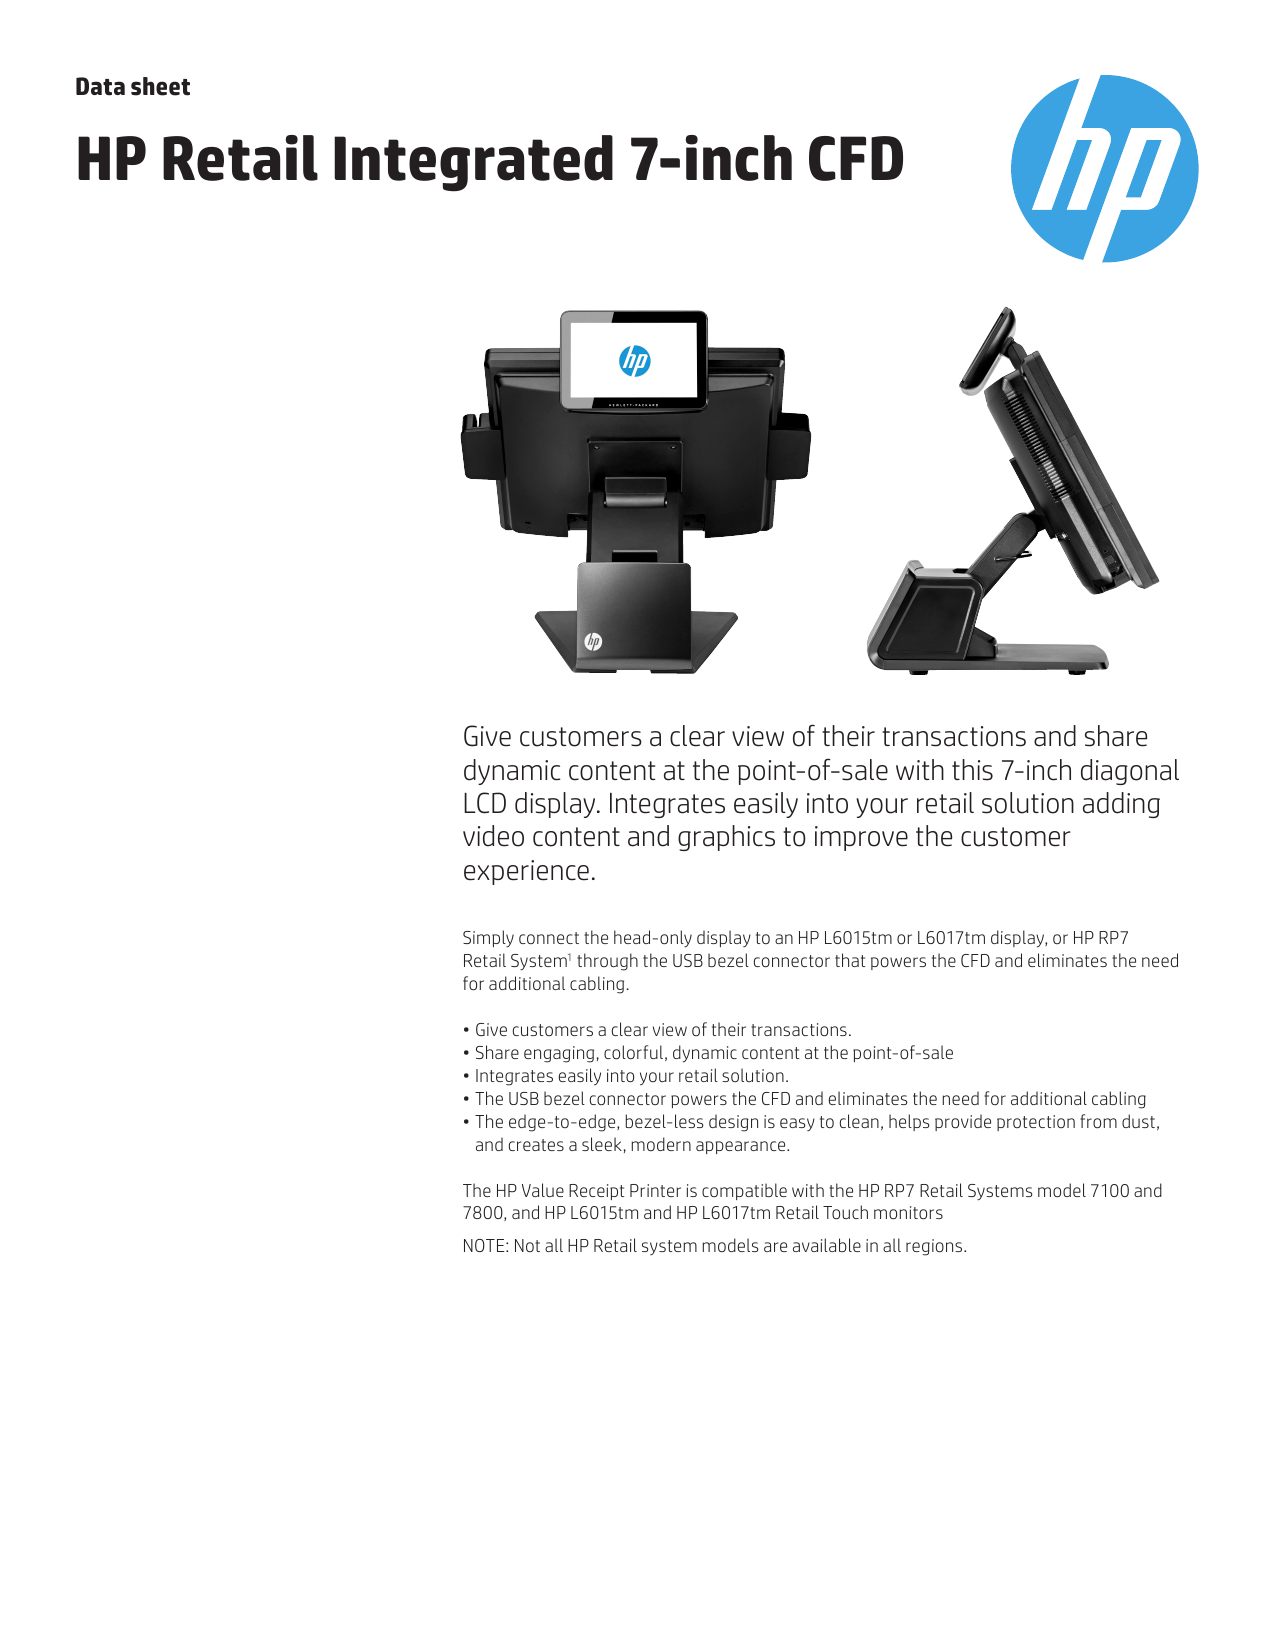 HP Retail Integrated 2x20 Display New G6U79AA 764676-001 